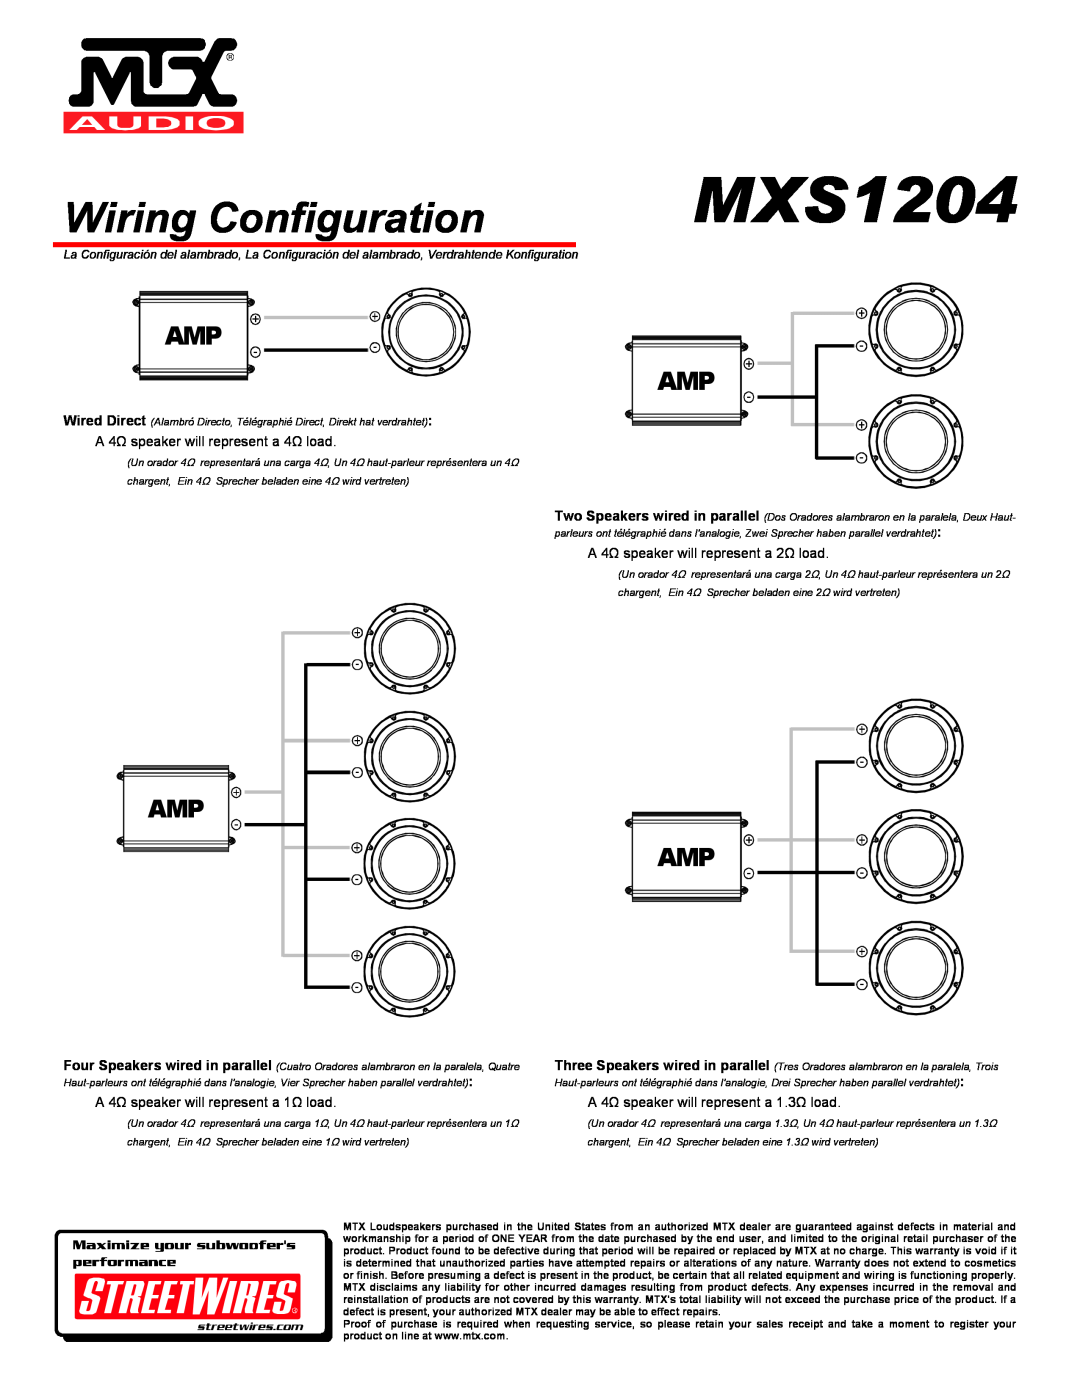 MTX Audio MXS1204 Wiring Configuration, A 4Ω speaker will represent a 4Ω load, A 4Ω speaker will represent a 2Ω load 